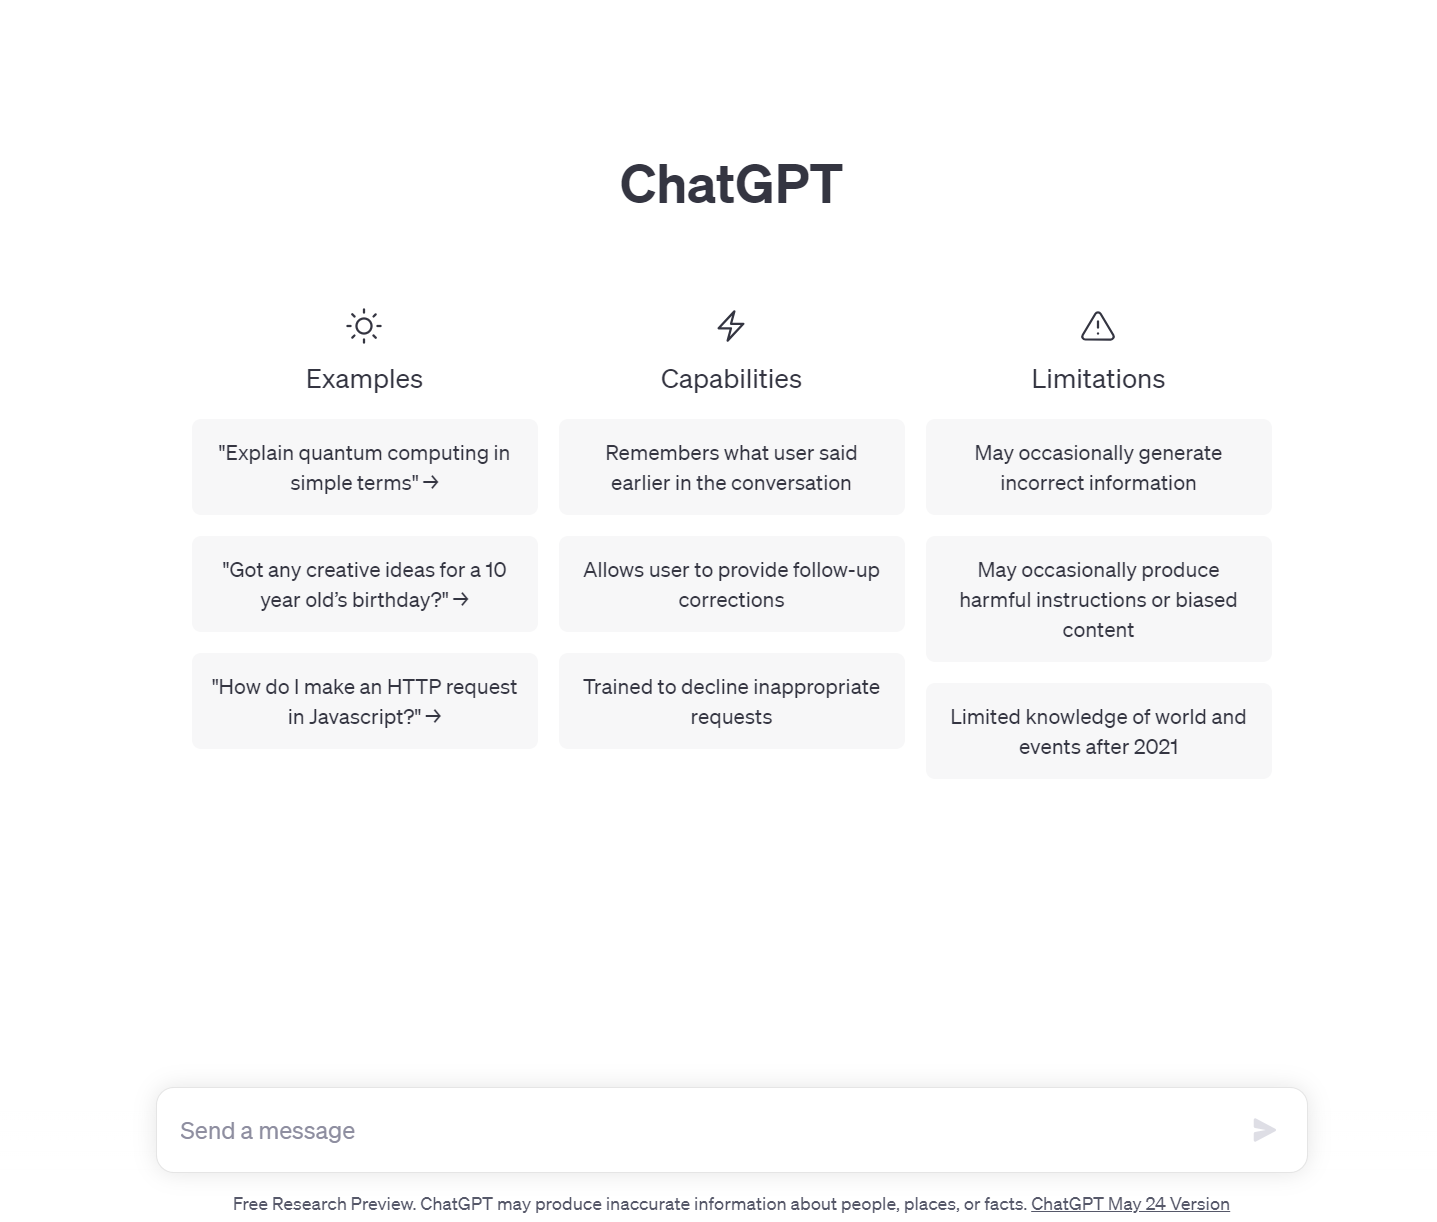 ChatGPT Interface